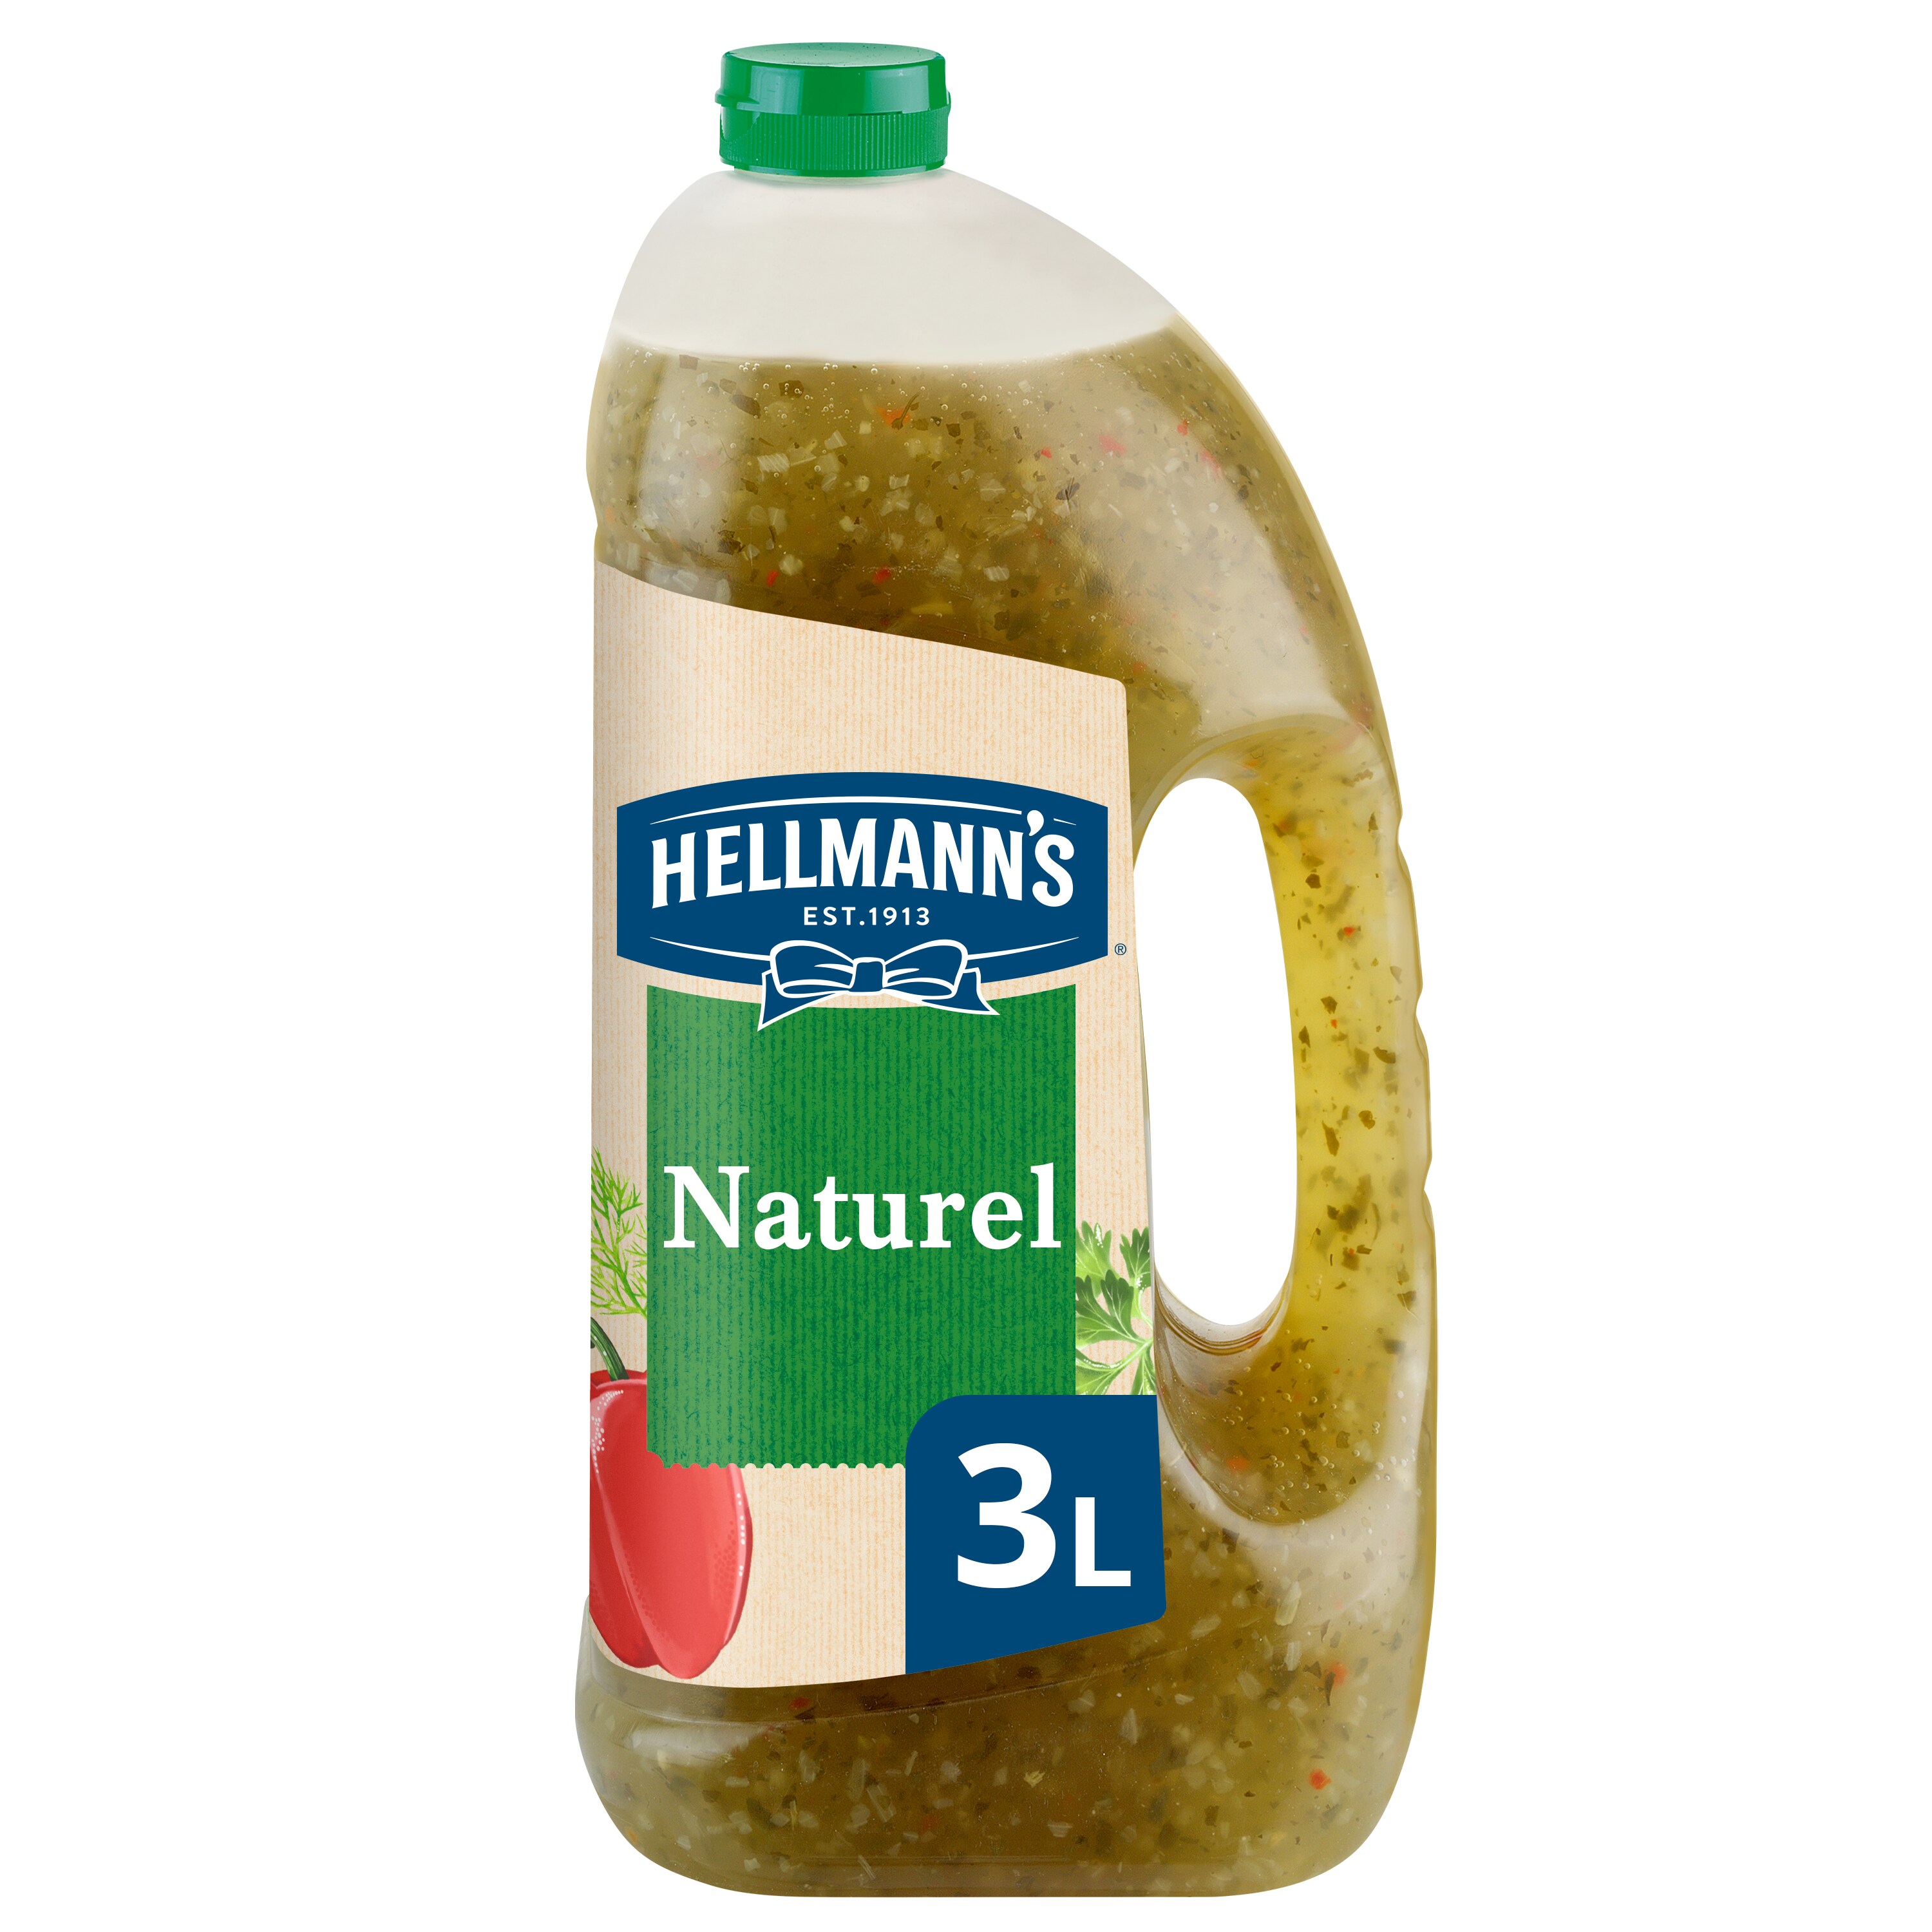 Hellmann's Naturel Dressing Vloeibaar 3L - 